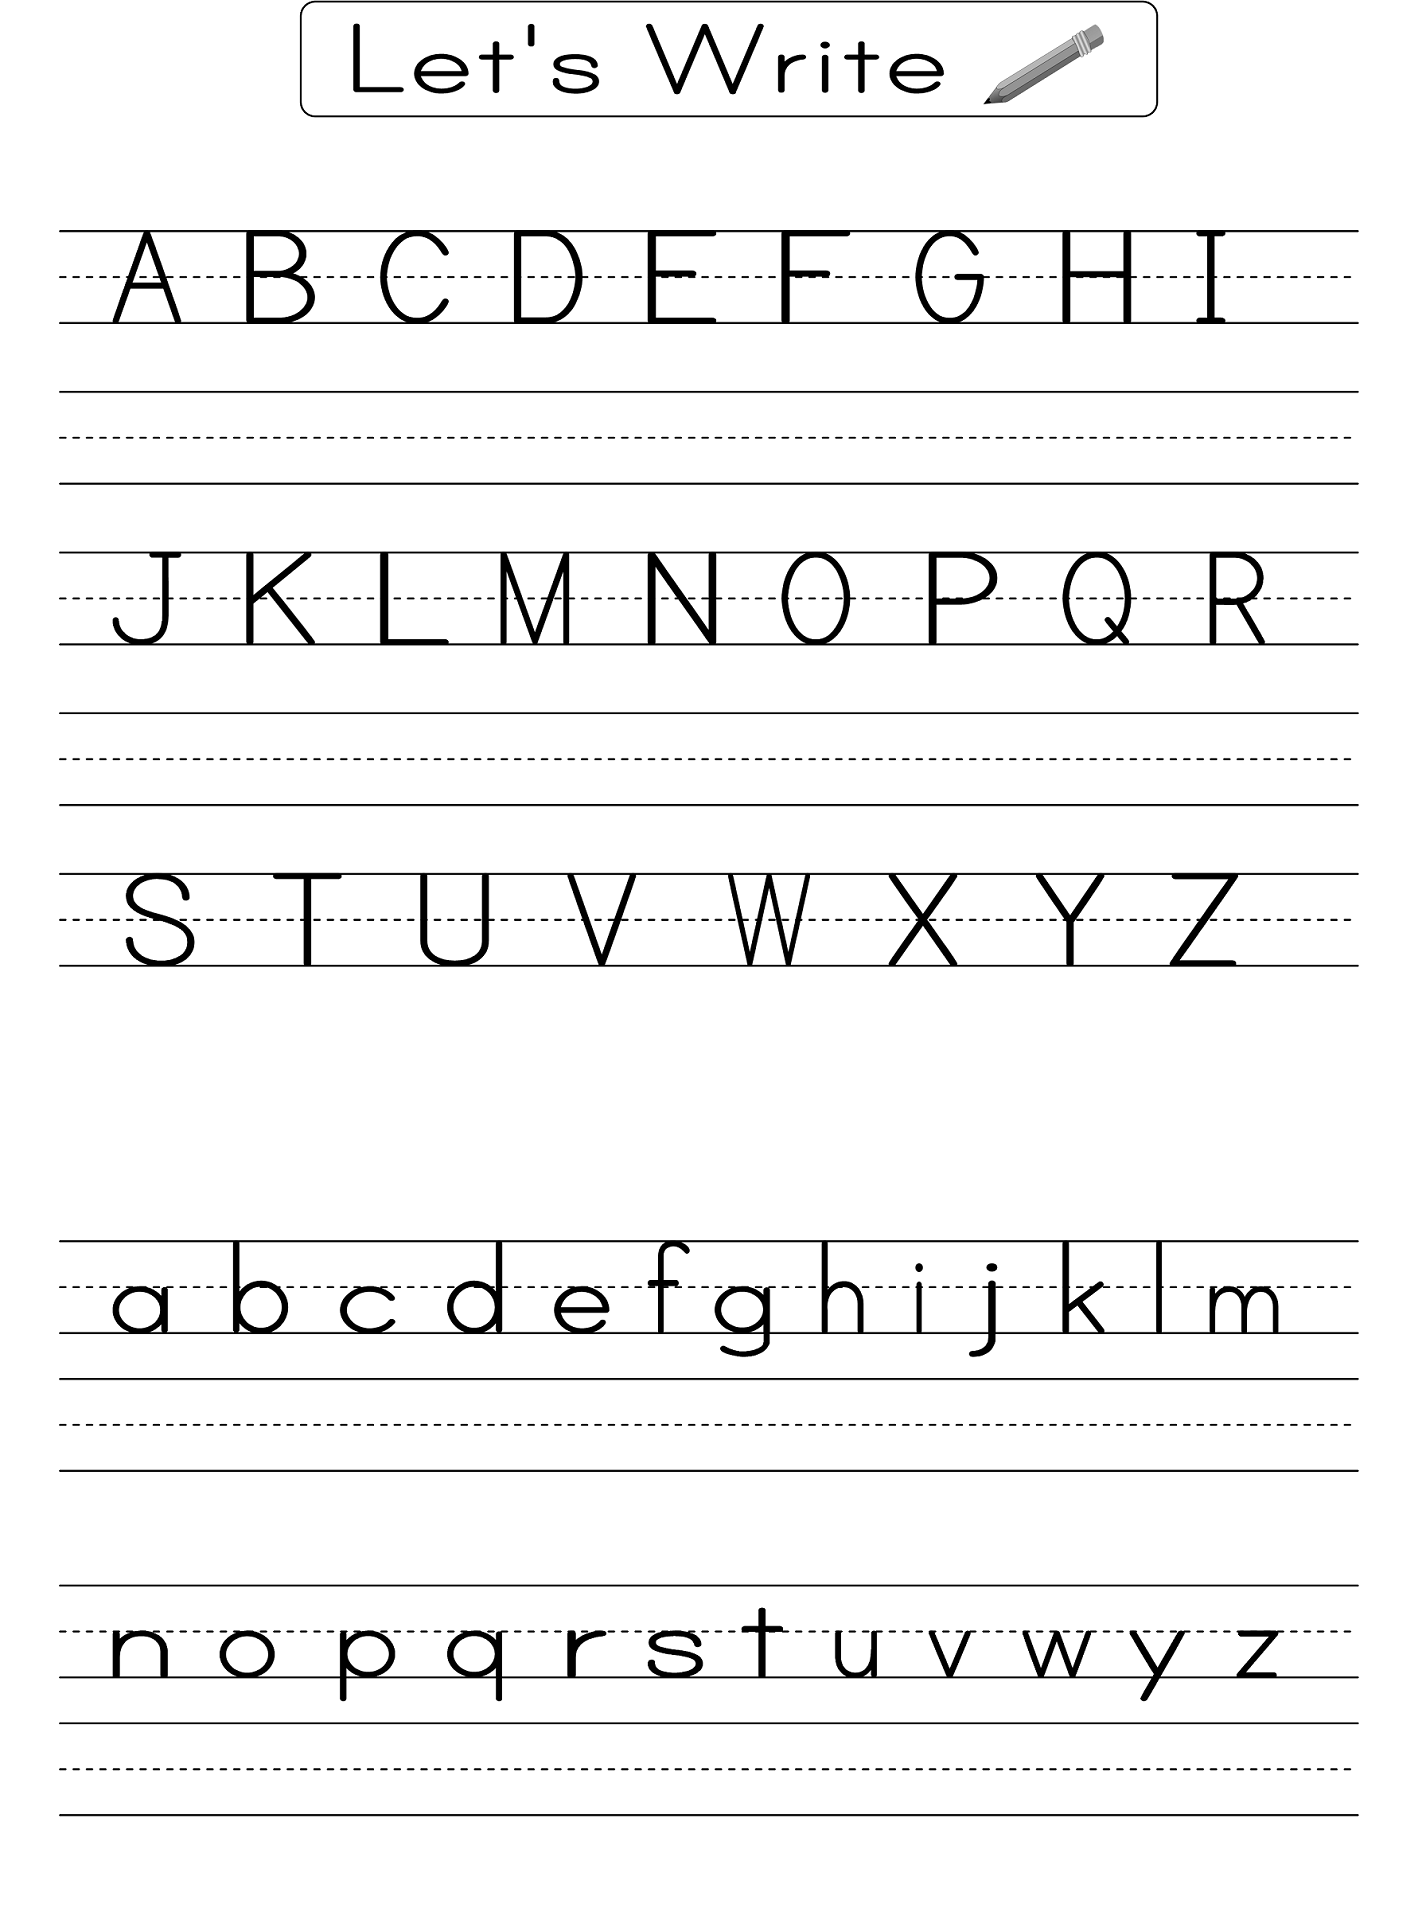 printable-kindergarten-alphabet-worksheets-printable-alphabet-worksheets